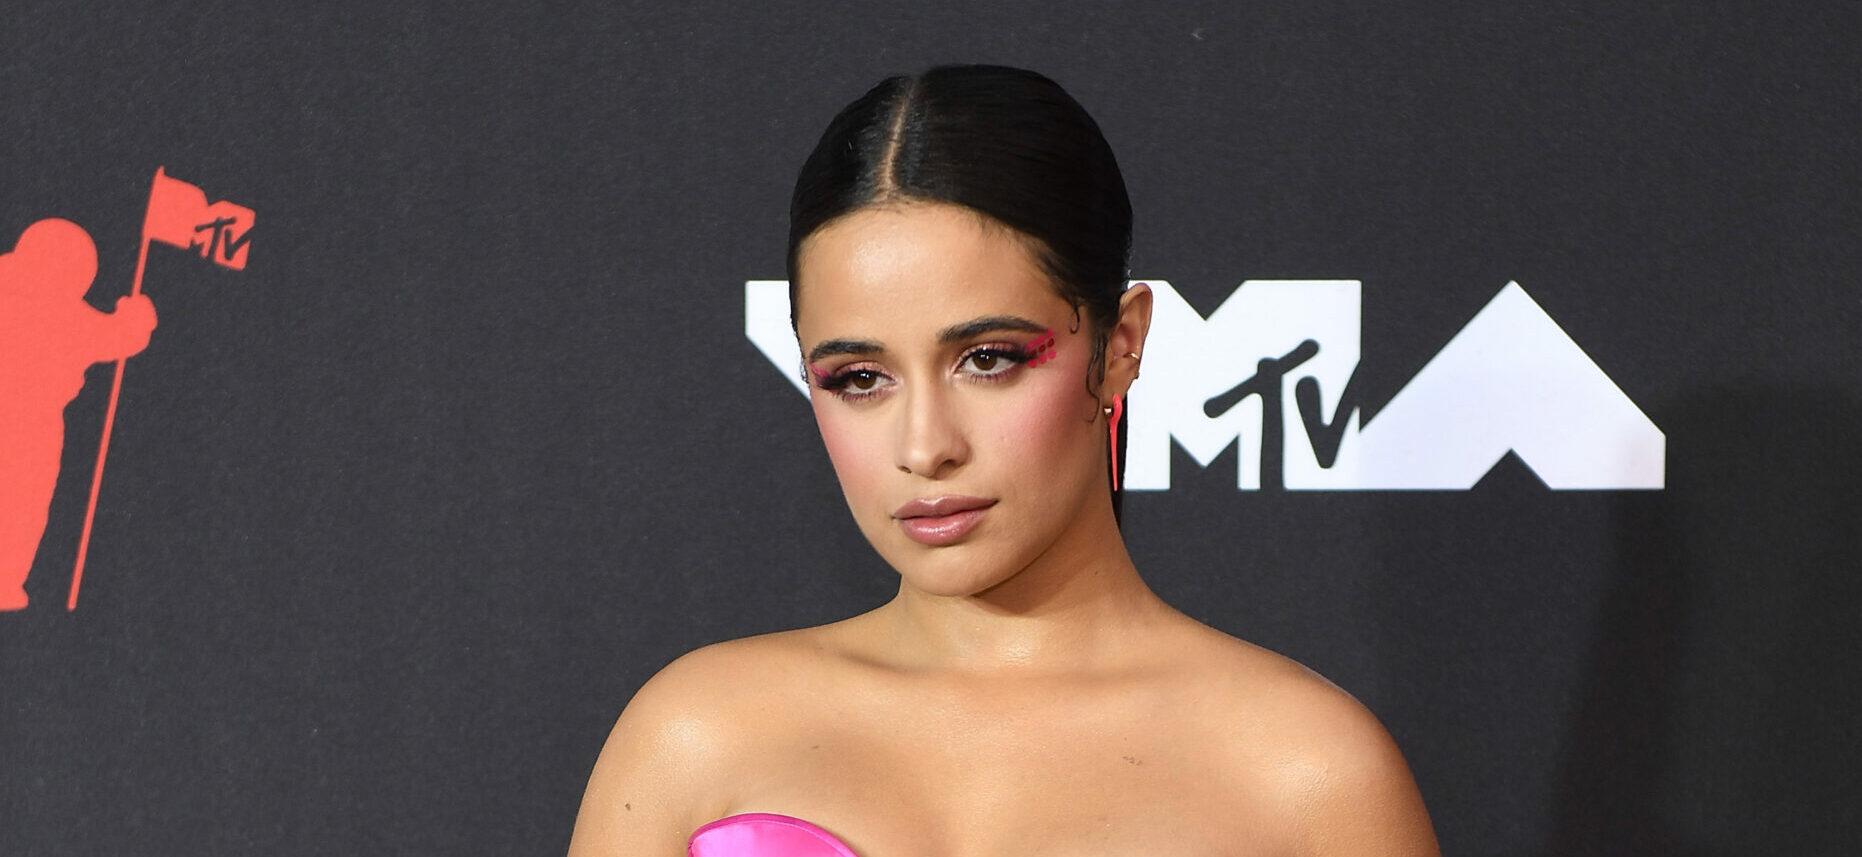 Camila Cabello at the 2021 MTV Video Music Awards